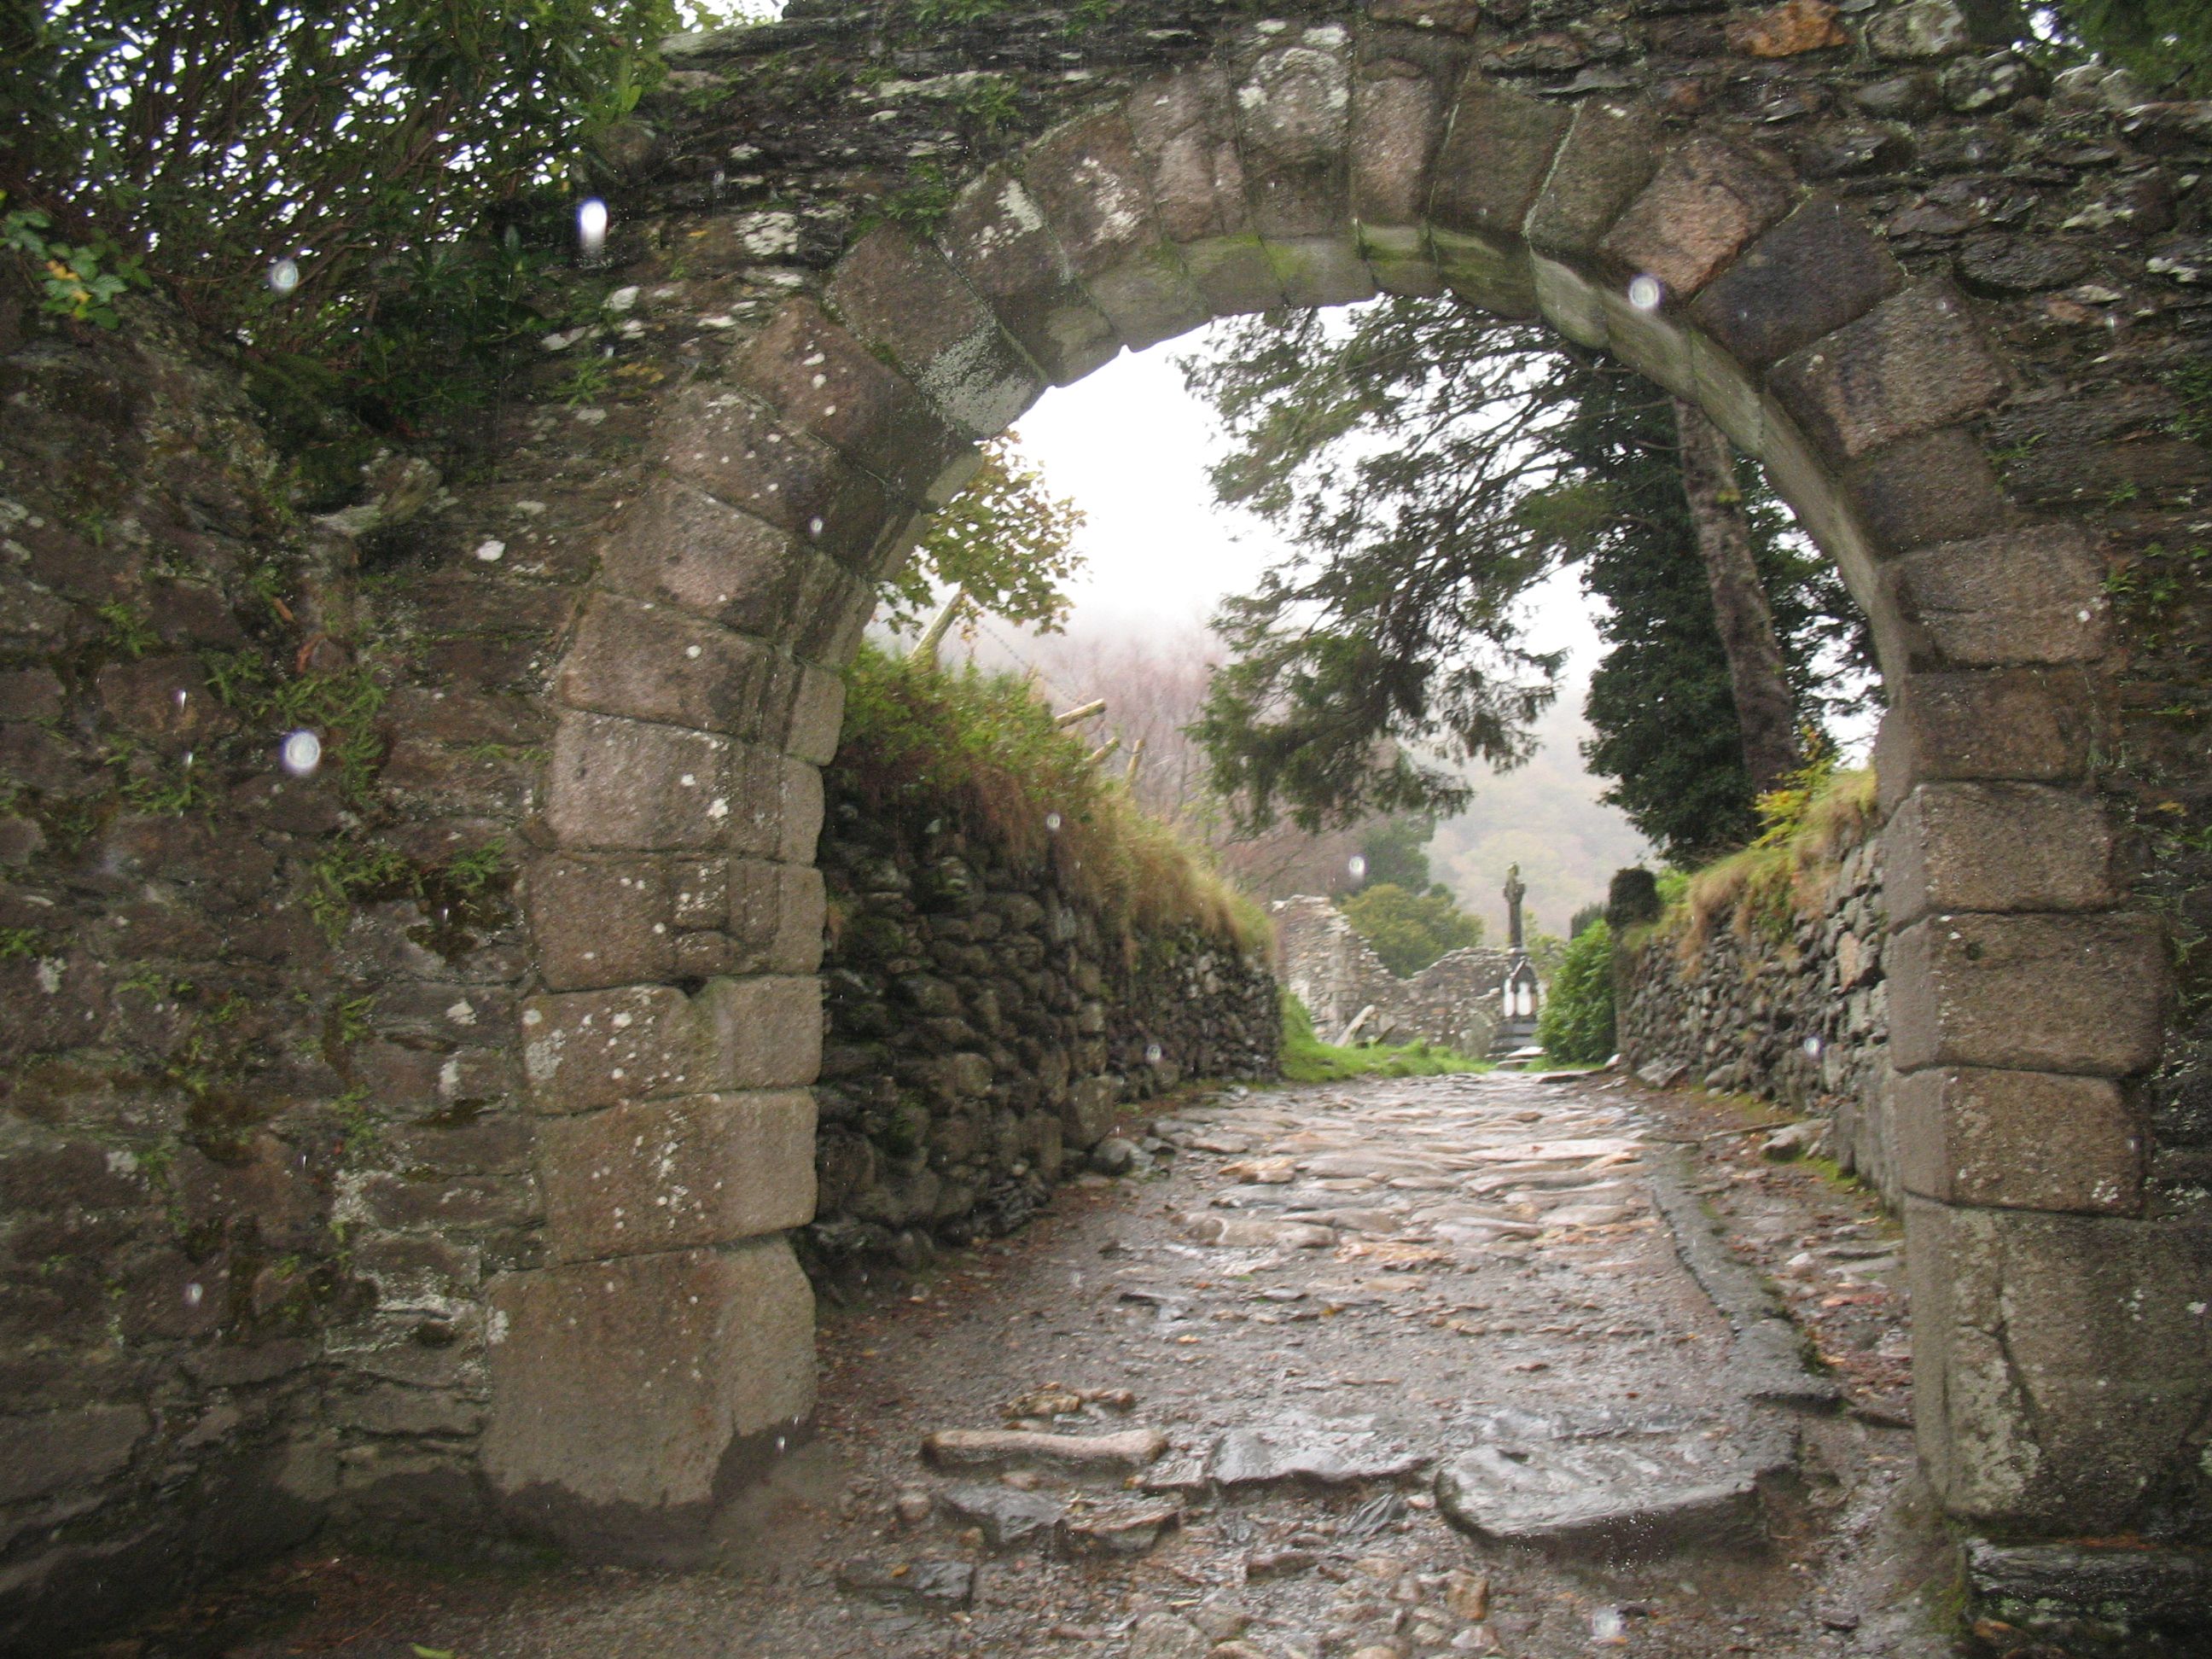 arch way | Castle Archway in Ireland | NATURE | Pinterest | Ireland ...